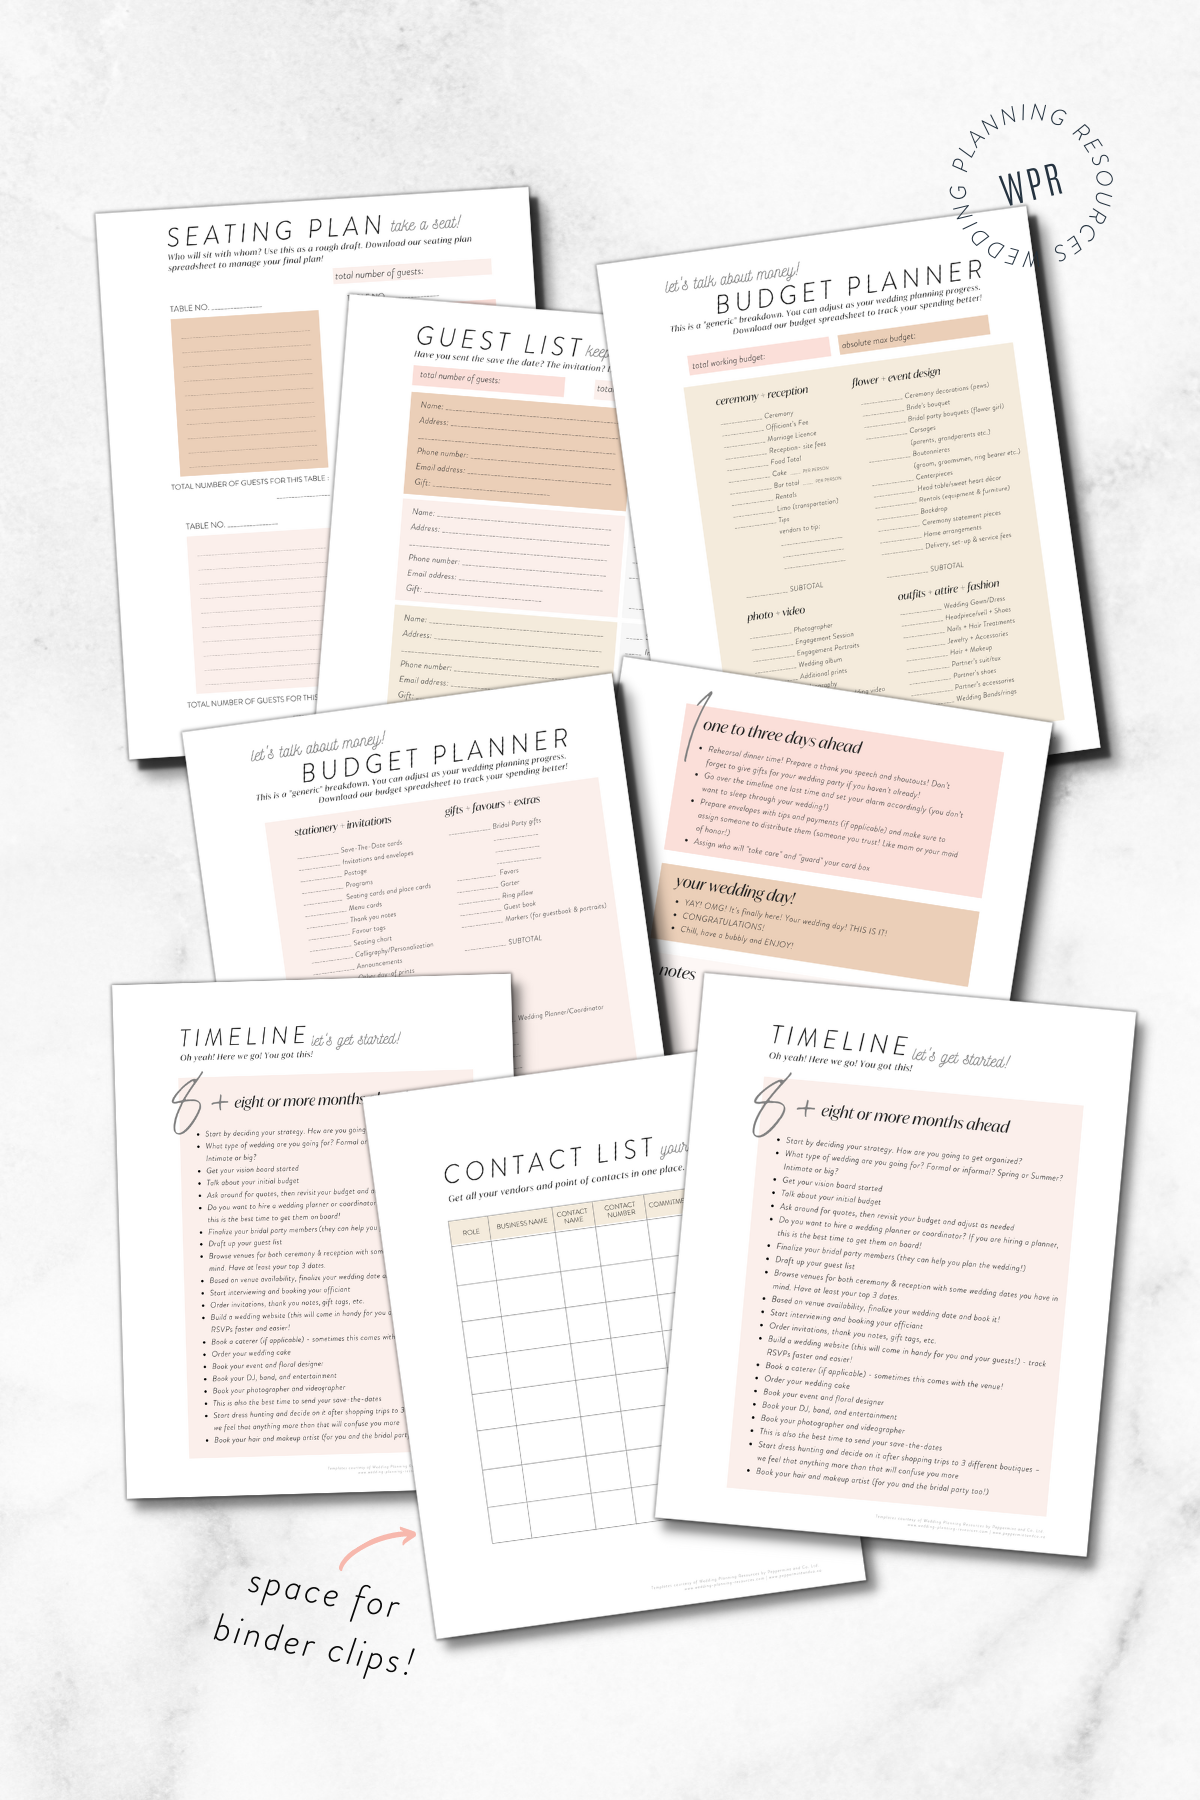 Cute Couple Wedding Planner Pages | Wedding Keepsake | Wedding Momento |  Printable Wedding Planner Kit | Wedding Binder Template Organizer